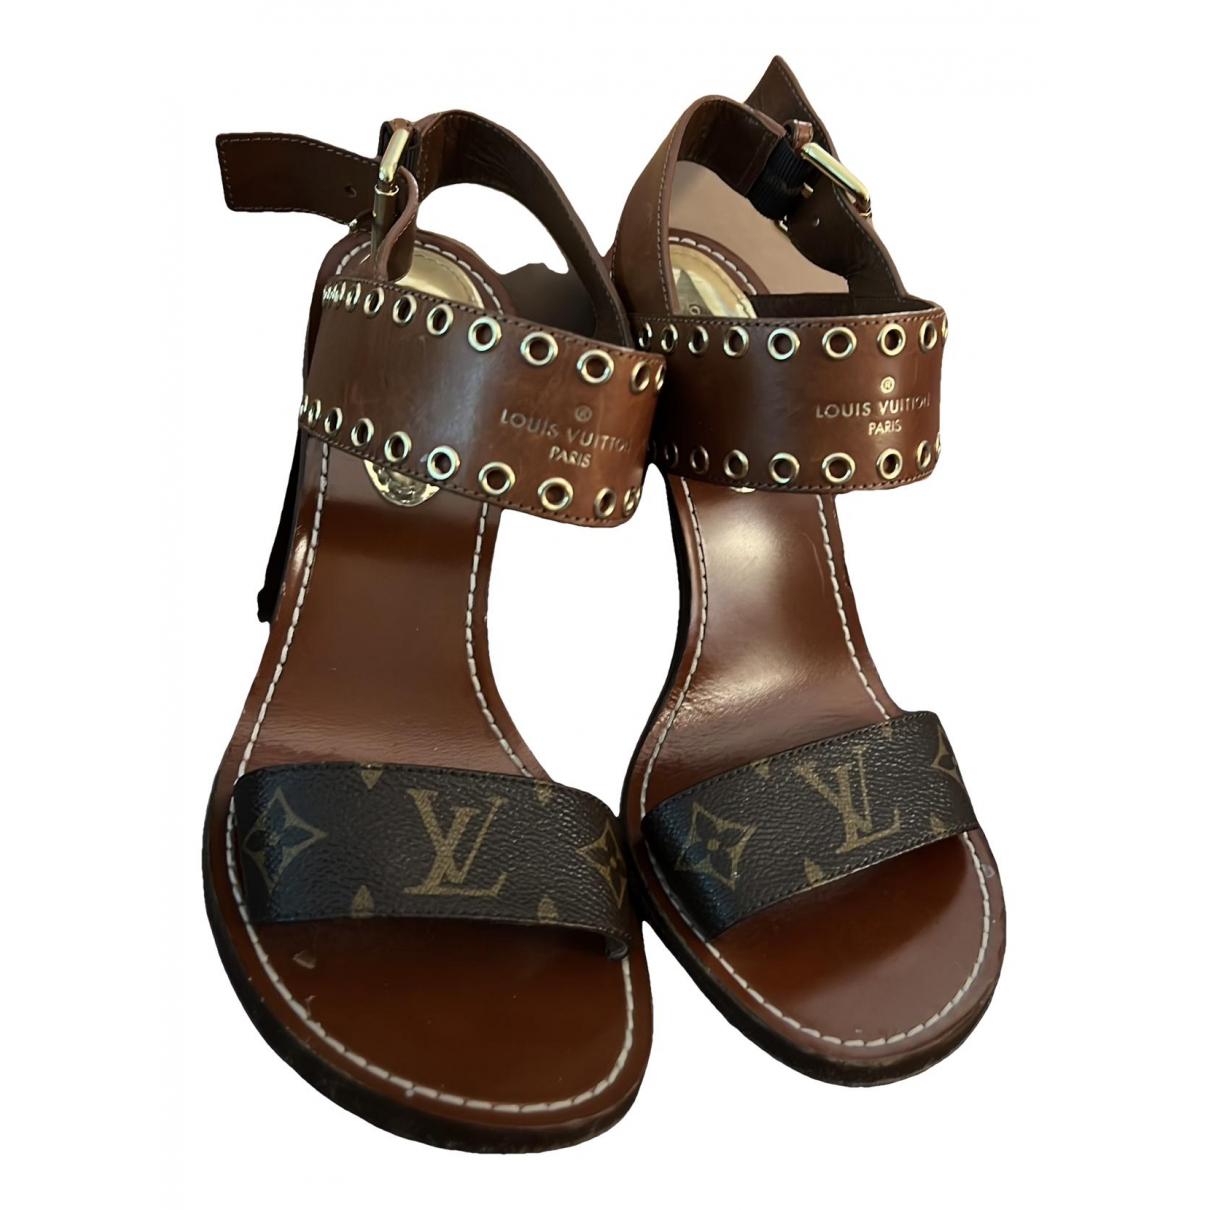 Louis Vuitton Passenger Flat Sandal Brown Size 8.5 - $852 (17% Off Retail)  - From Amelia